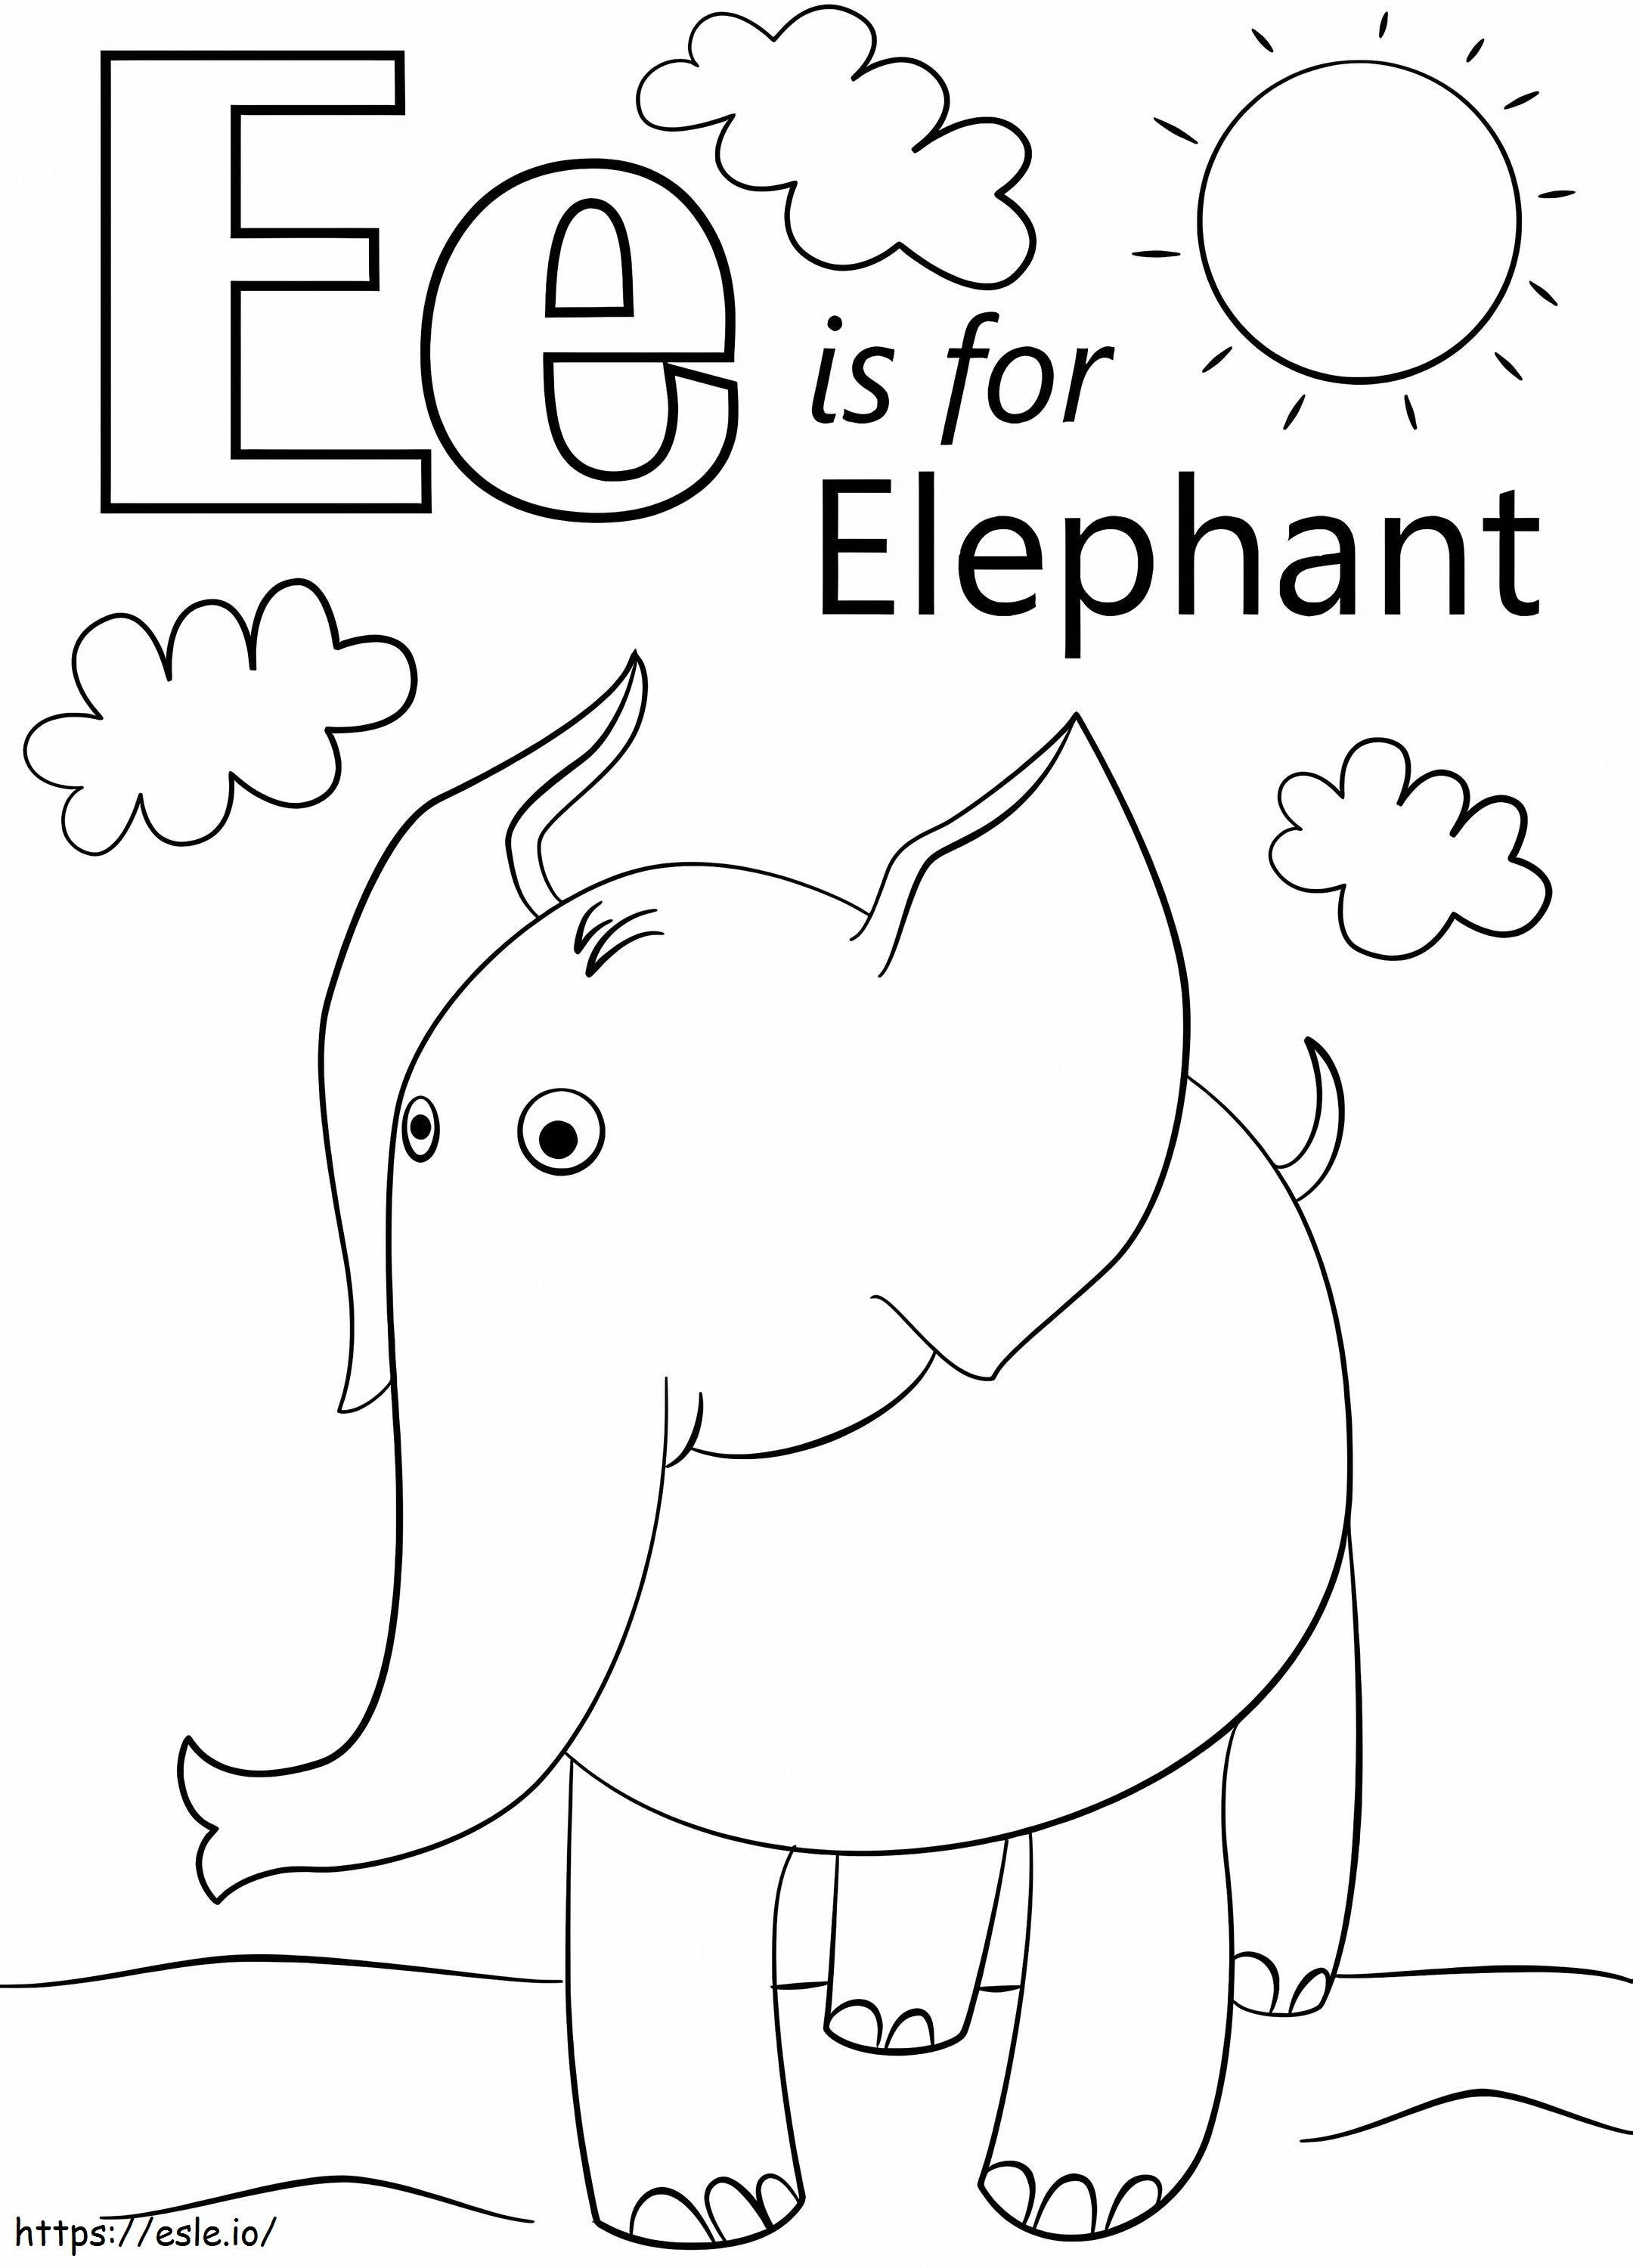 Elefante Letra E para colorear